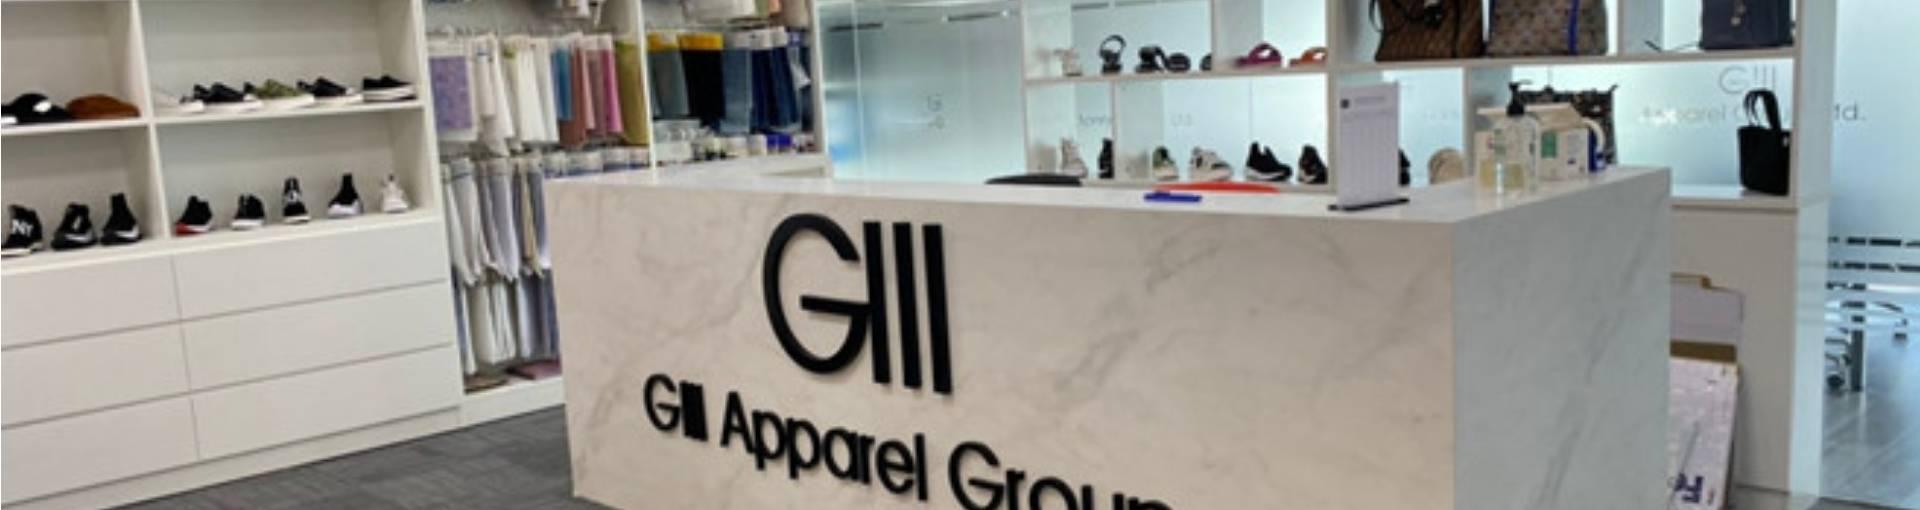 G-III Apparel Group - Vietnam office